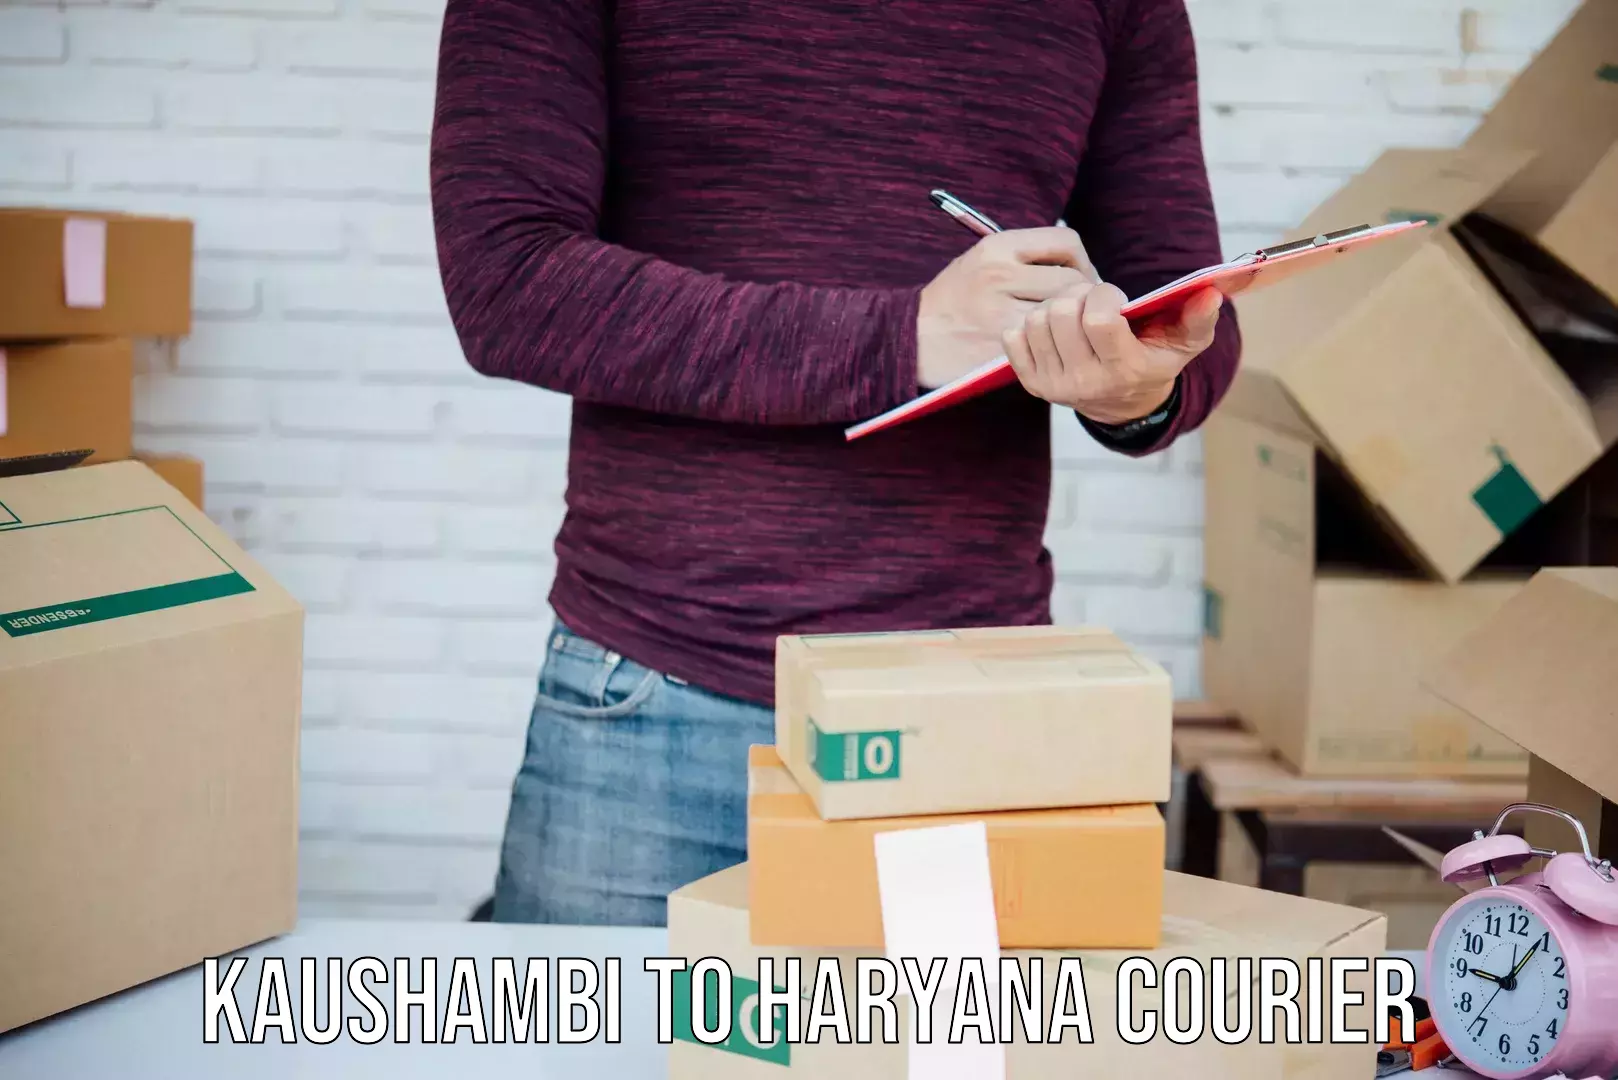 Courier service comparison Kaushambi to Agroha